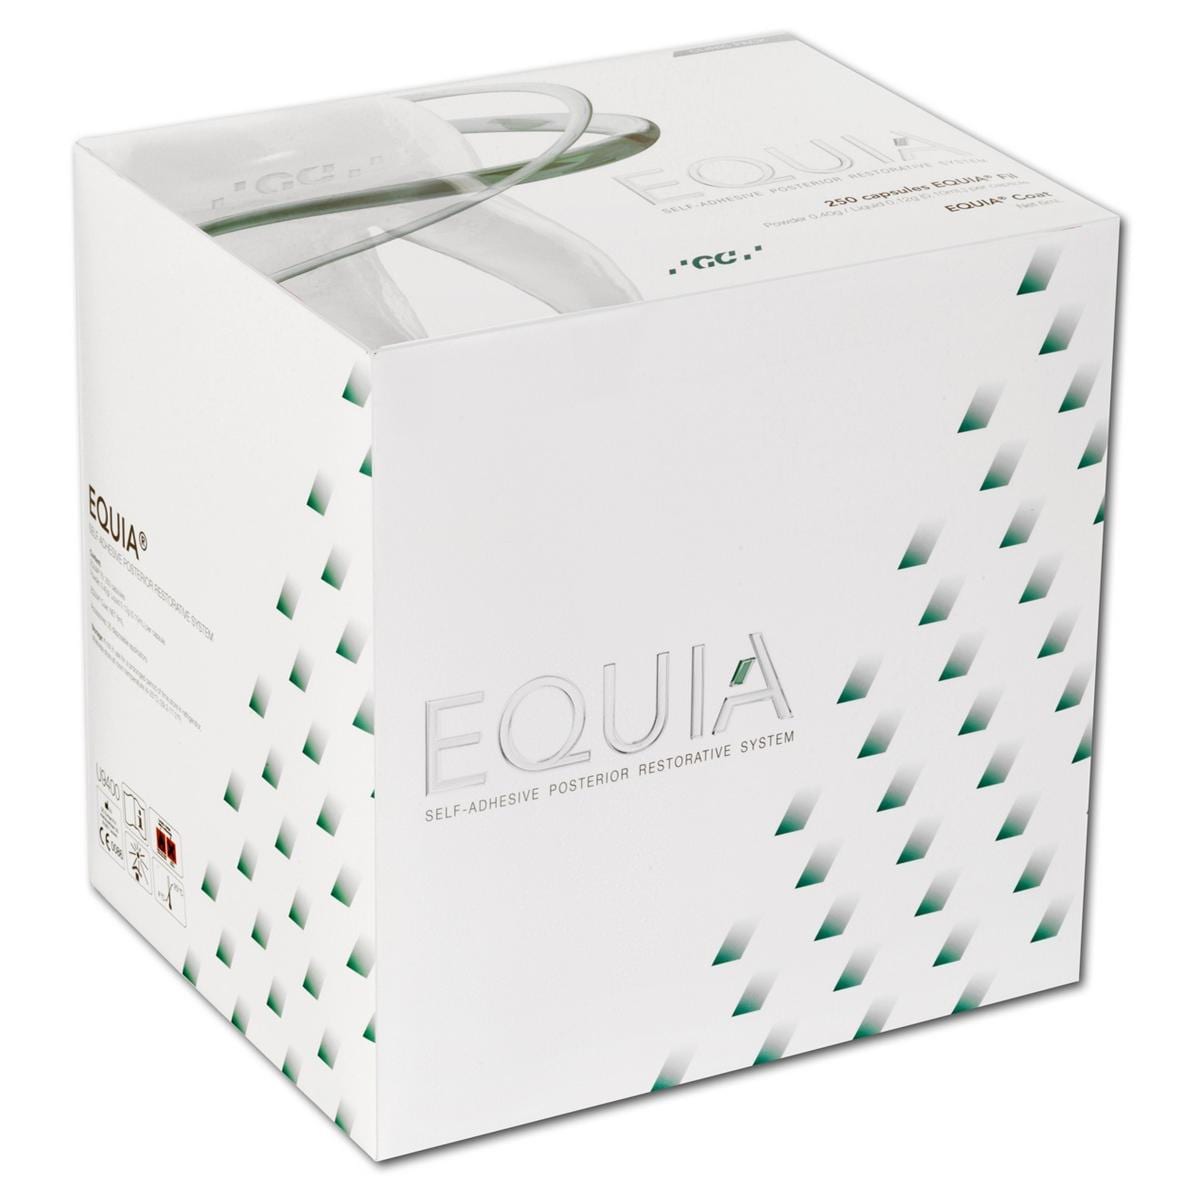 EQUIA Clinic Pack - A3